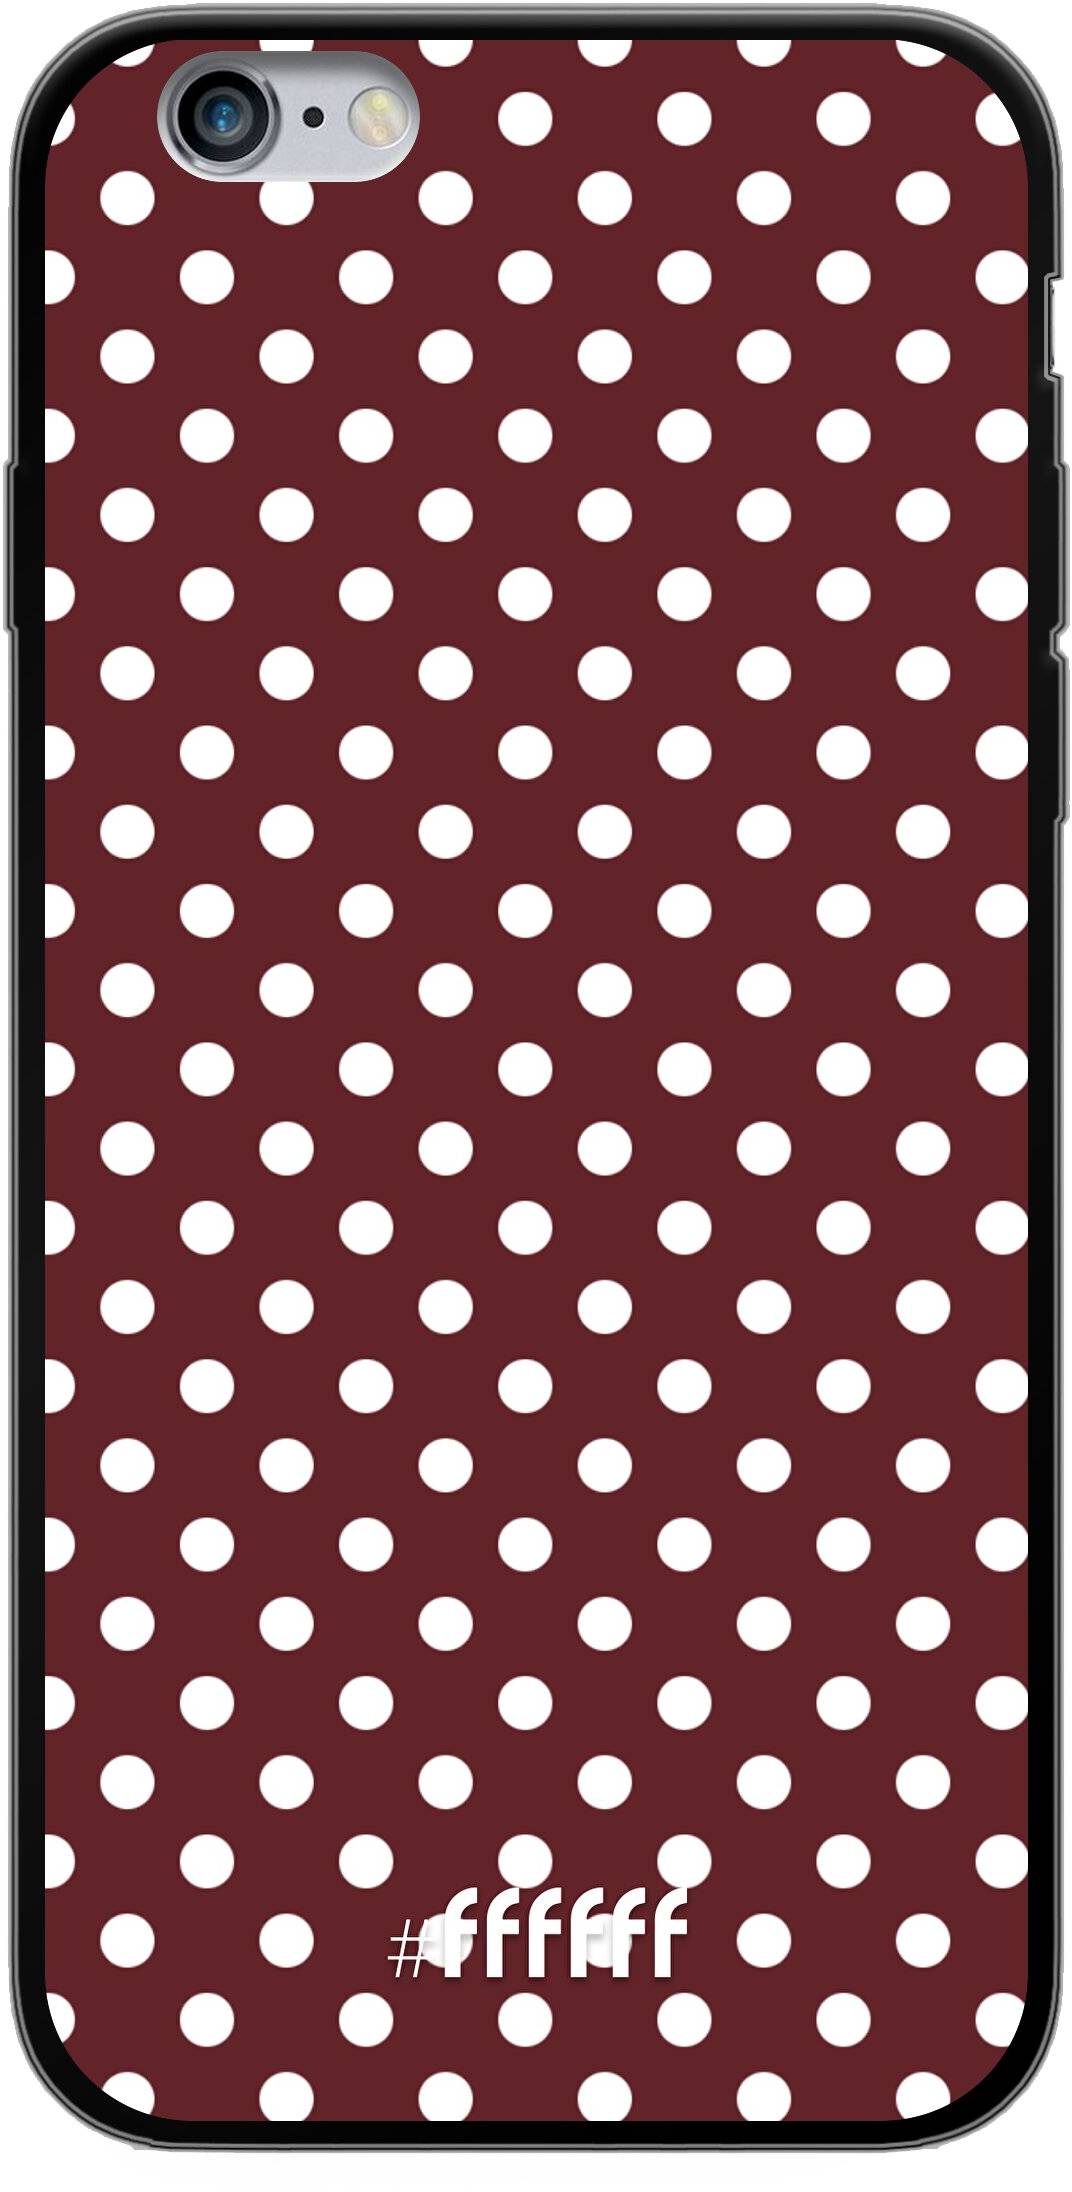 Burgundy Dots iPhone 6